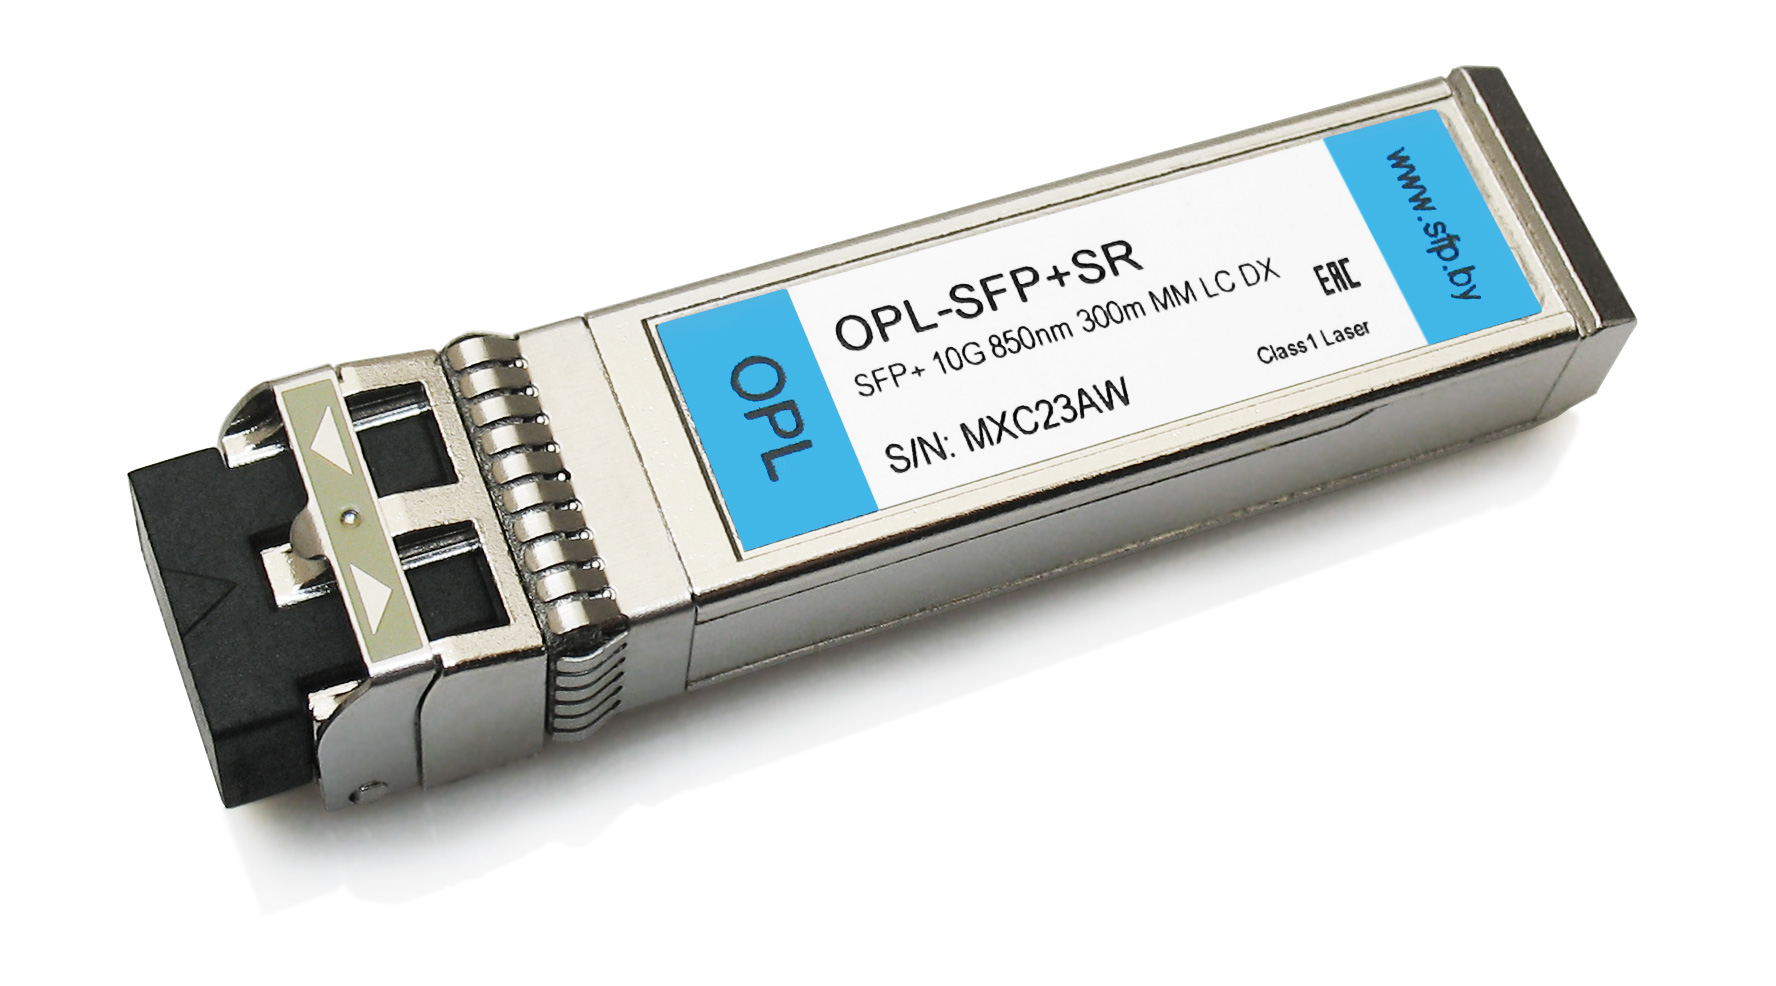 OPL-SFP+SR